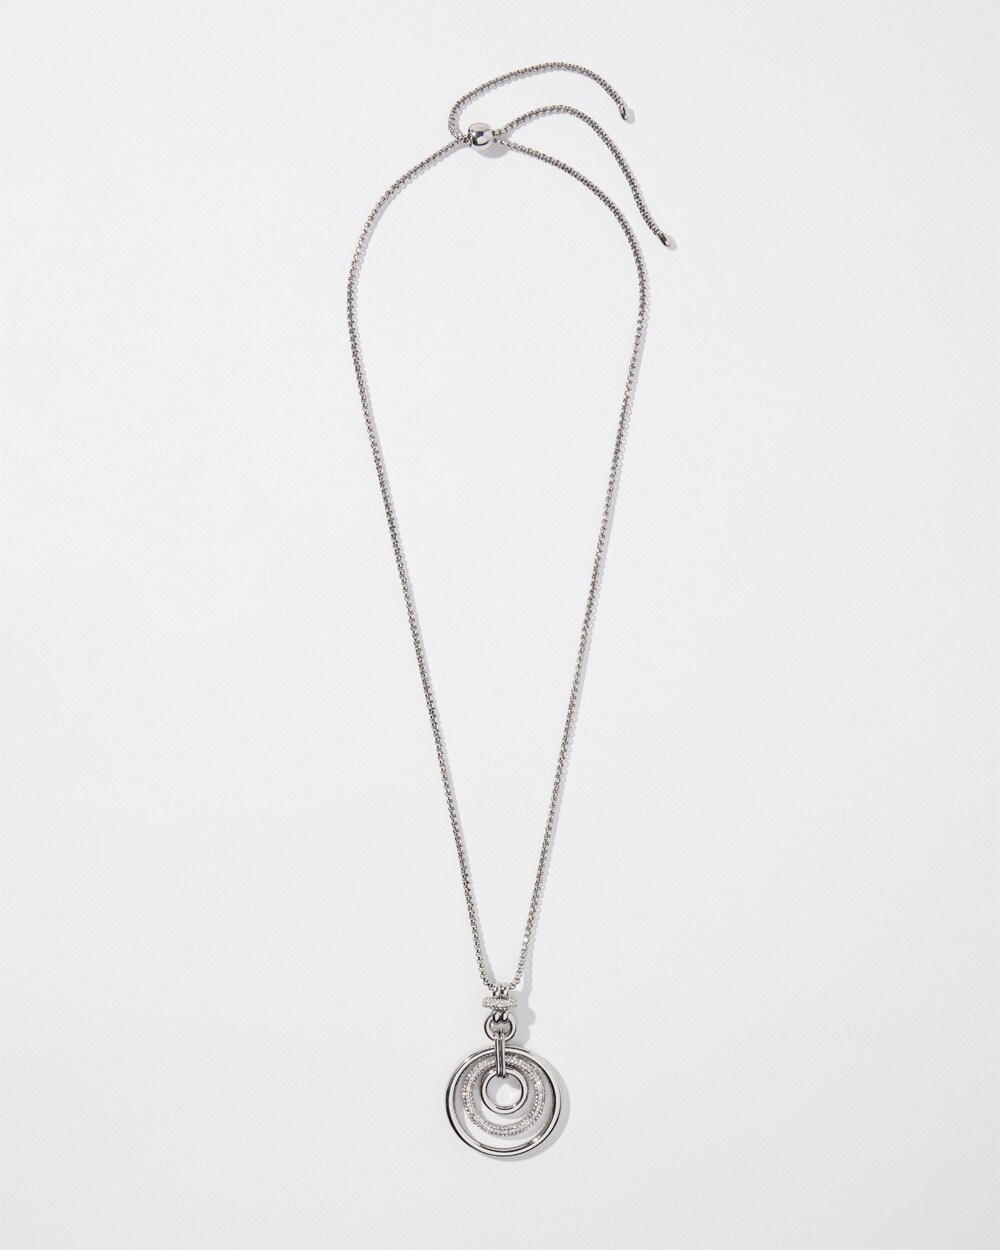 Adjustable Silver Tone Pendant Necklace